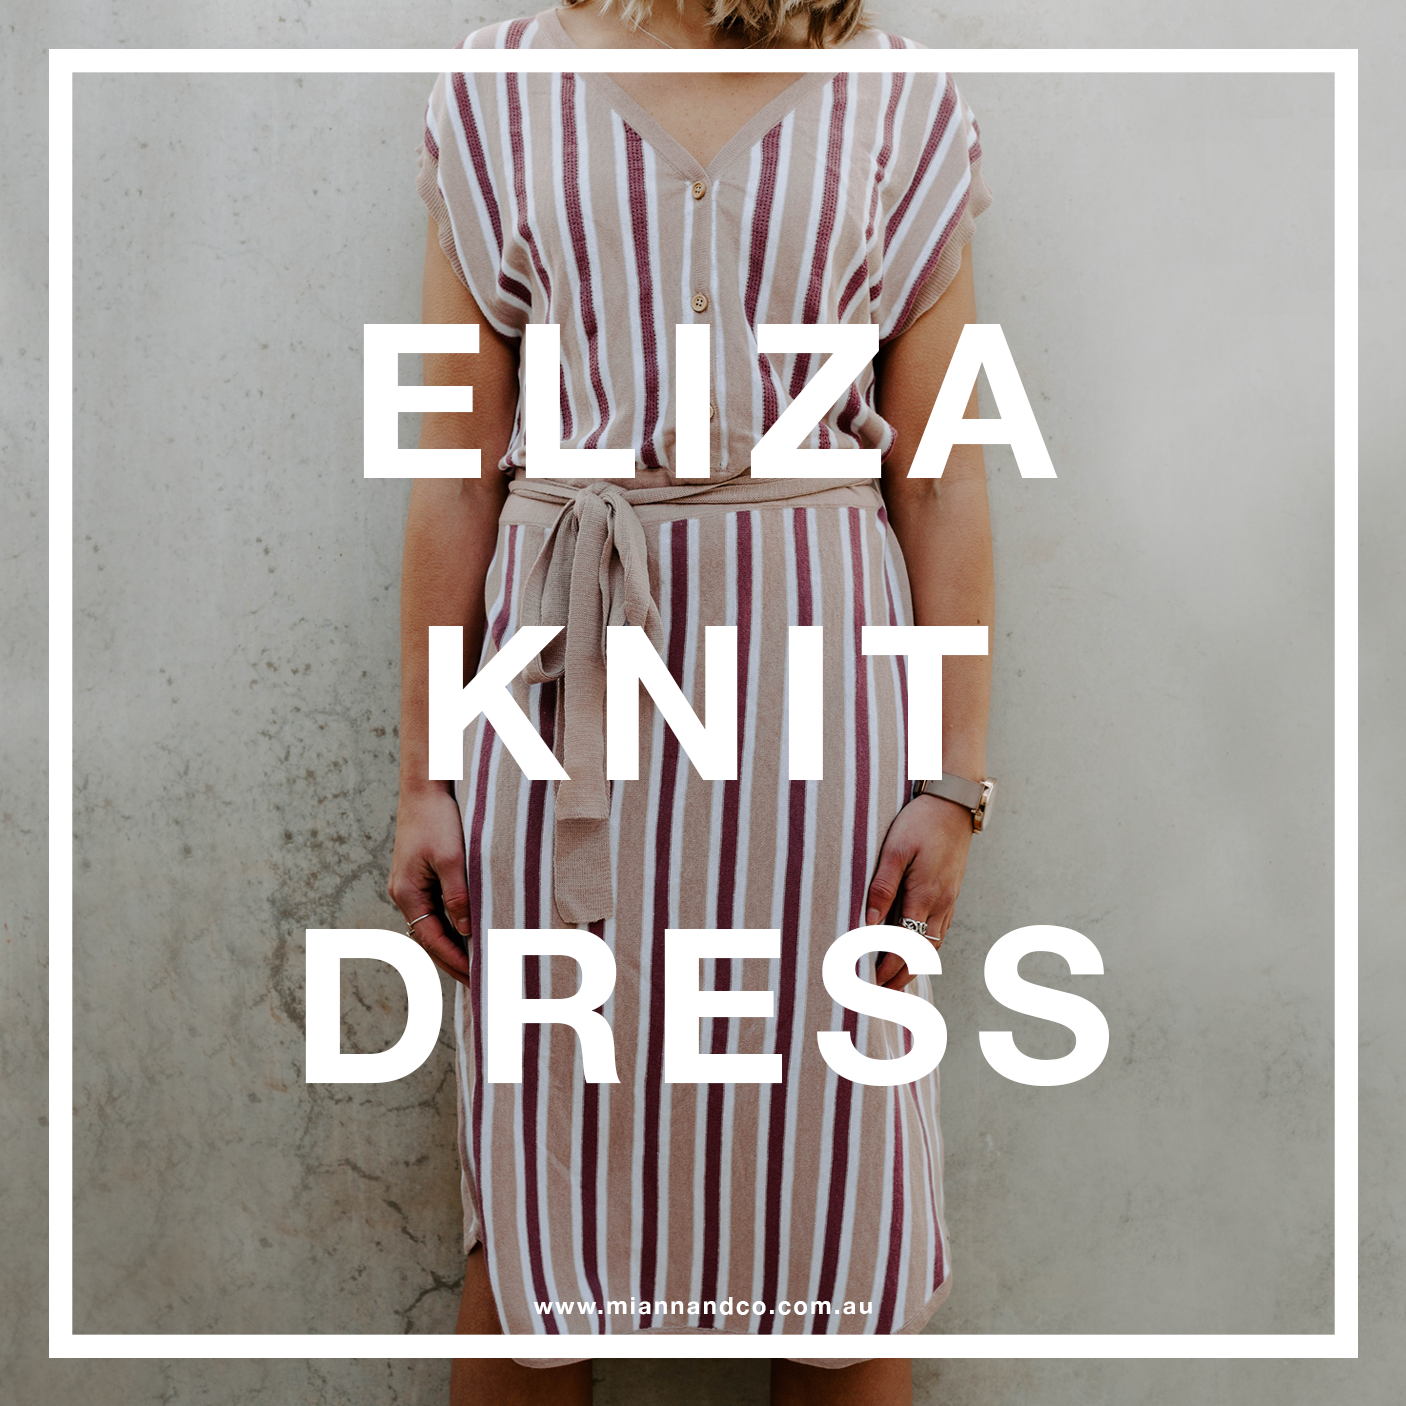 ELIZA KNIT DRESS